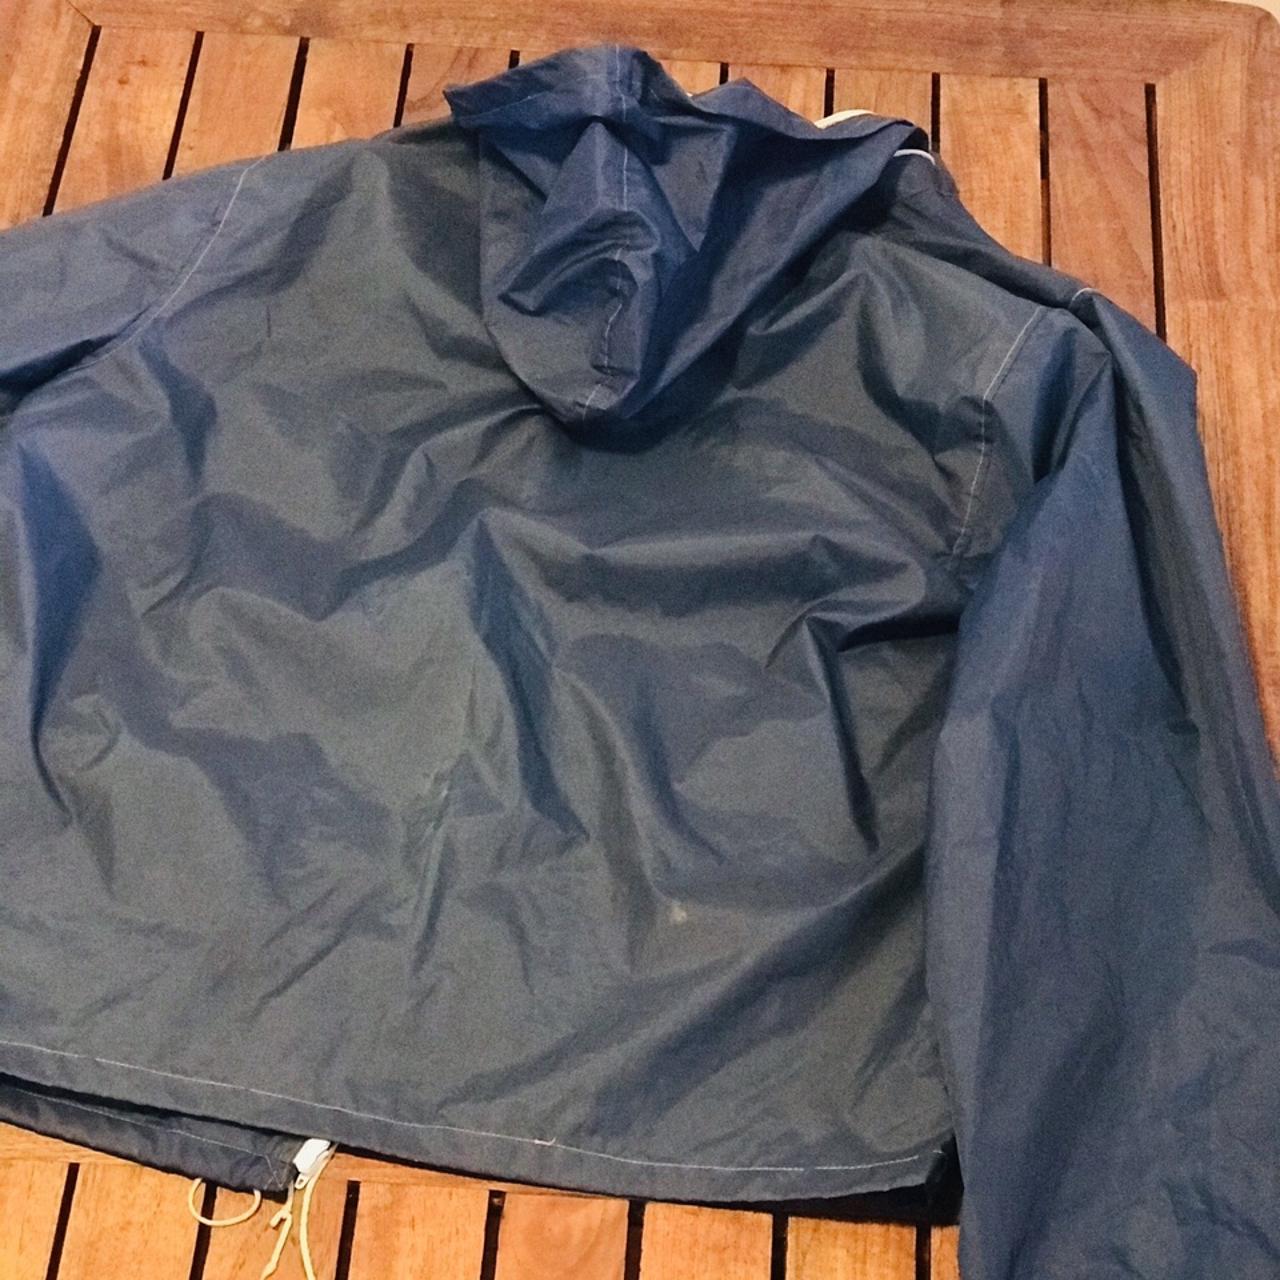 Product Image 4 - 1970’s wind breaker jacket, cap